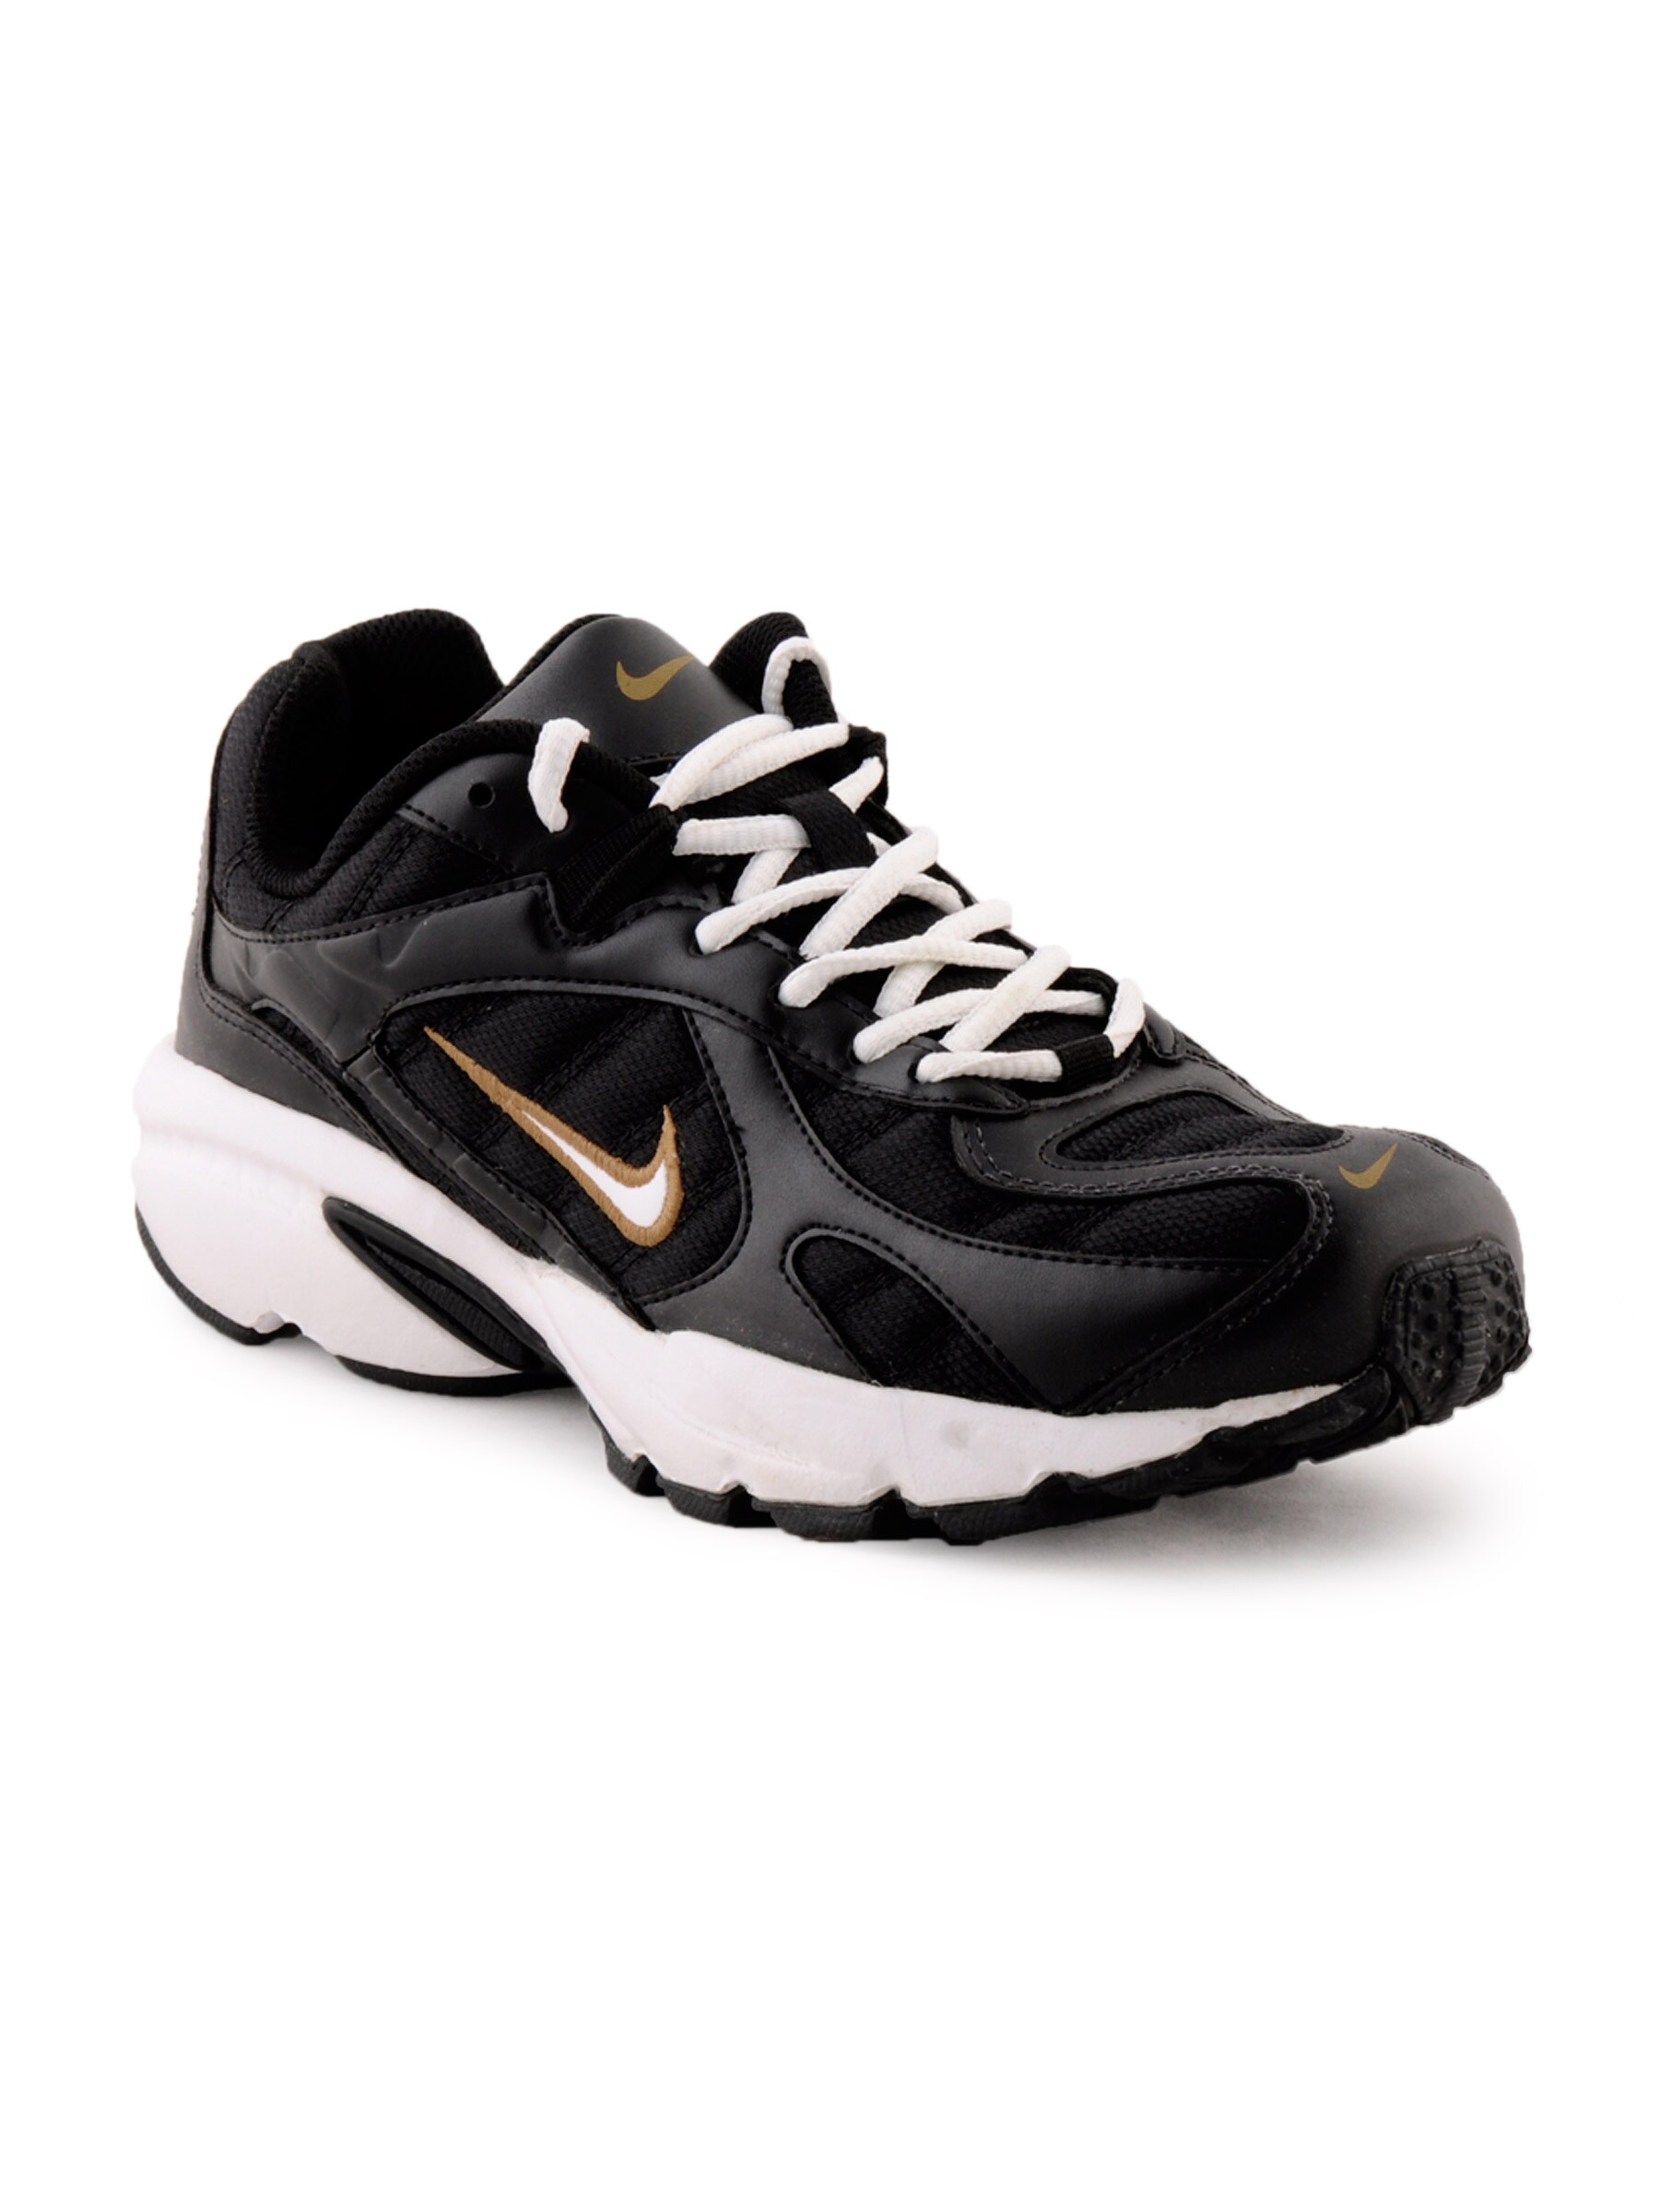 Nike Men Metallic Gold Black Sports Shoes